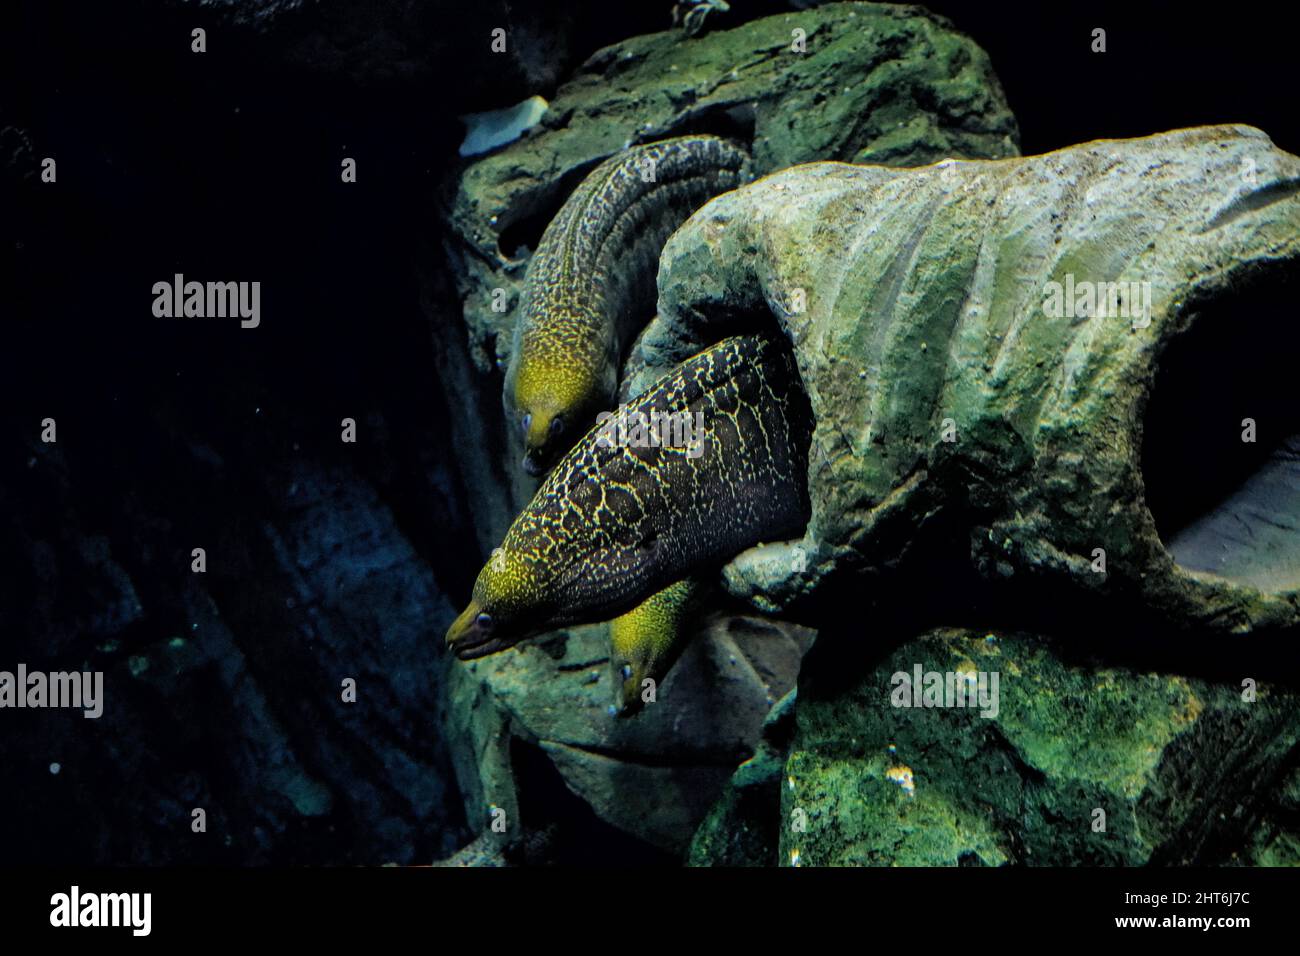 https://c8.alamy.com/comp/2HT6J7C/closeup-of-blind-eel-swimming-underwater-2HT6J7C.jpg